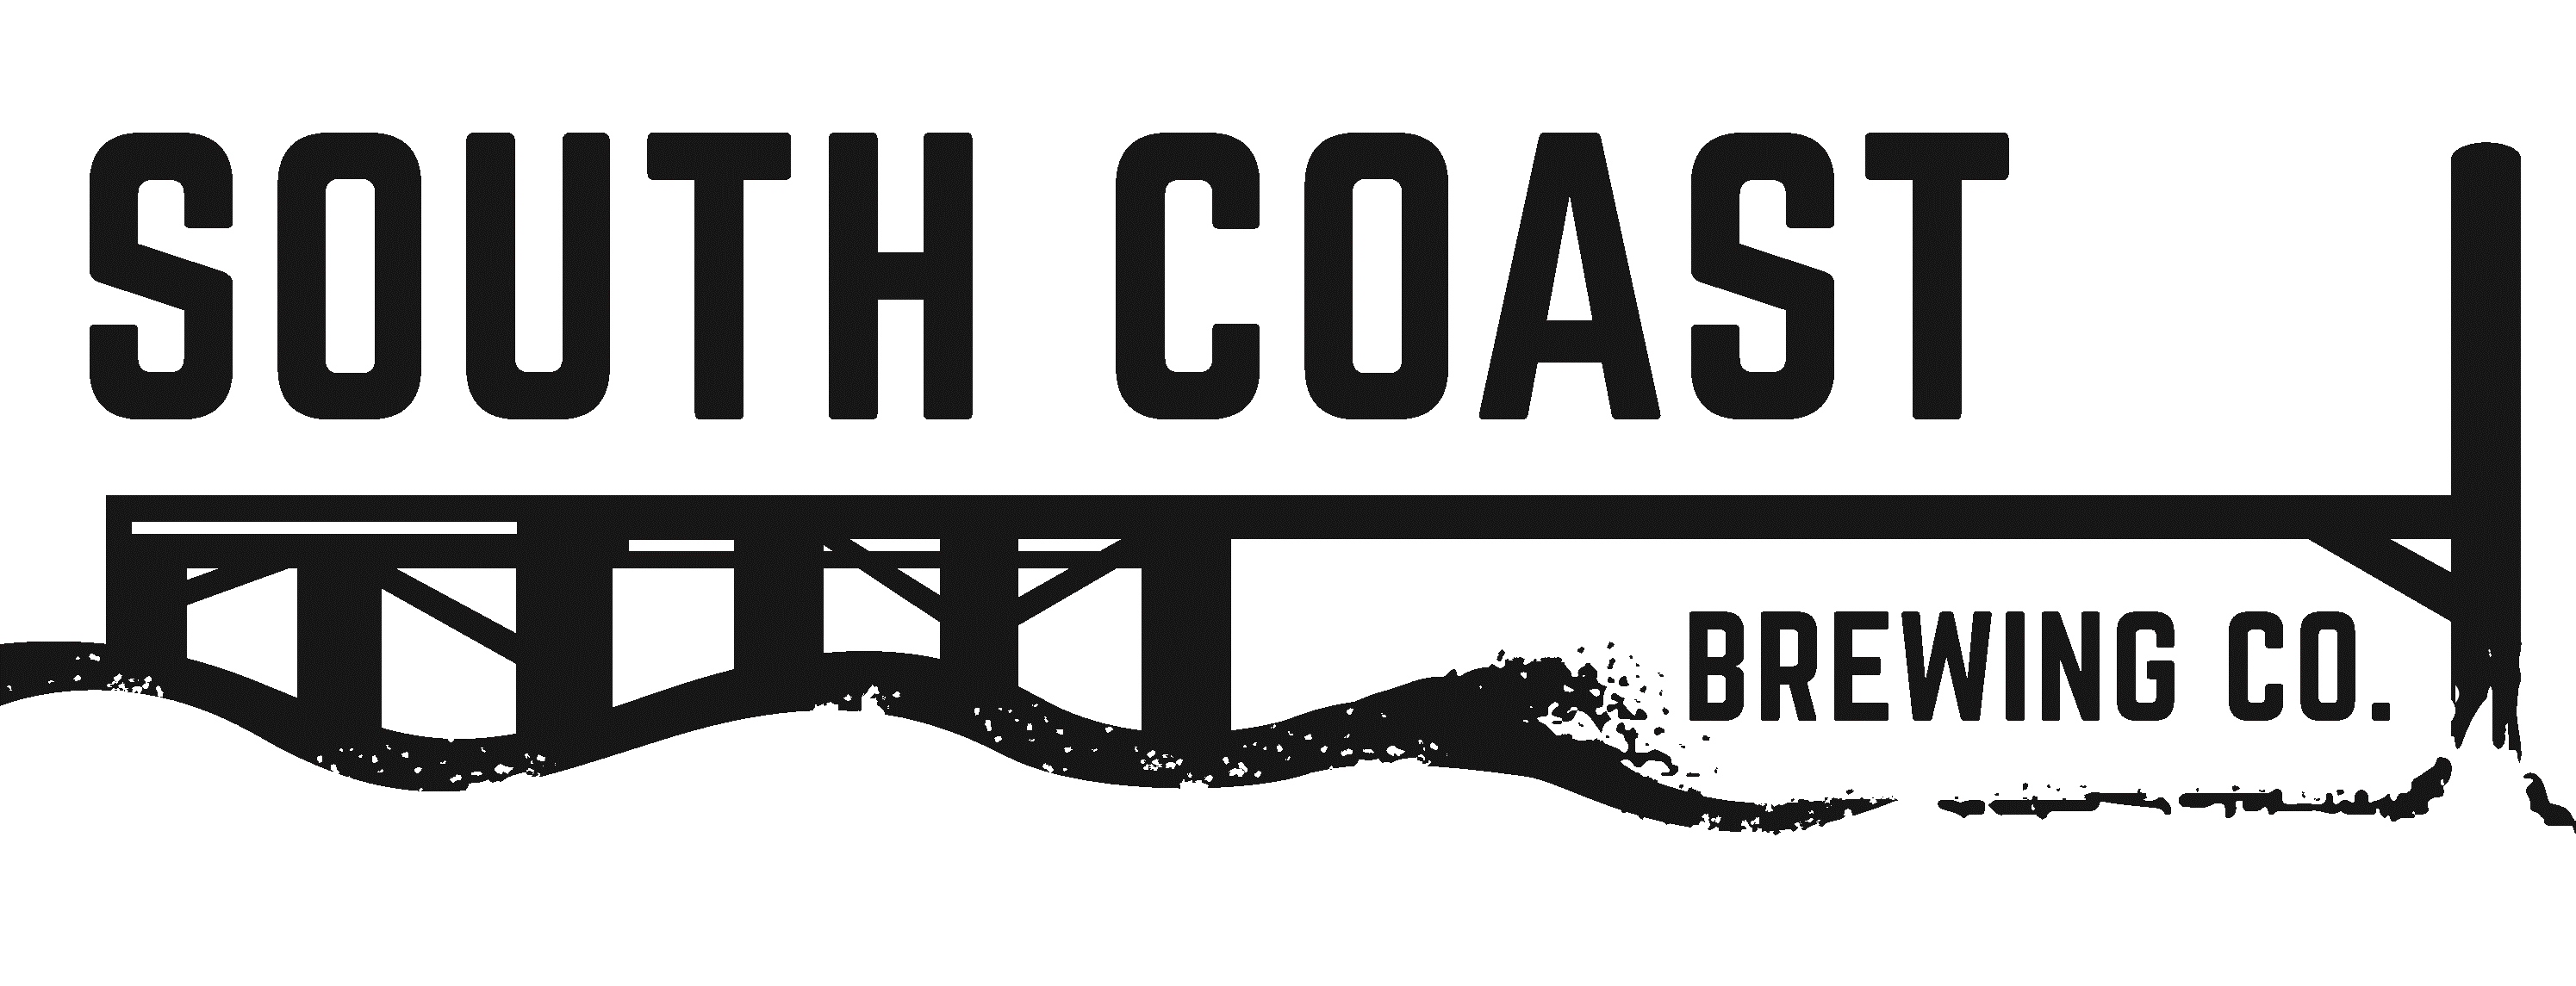 South Coast Brewing Co